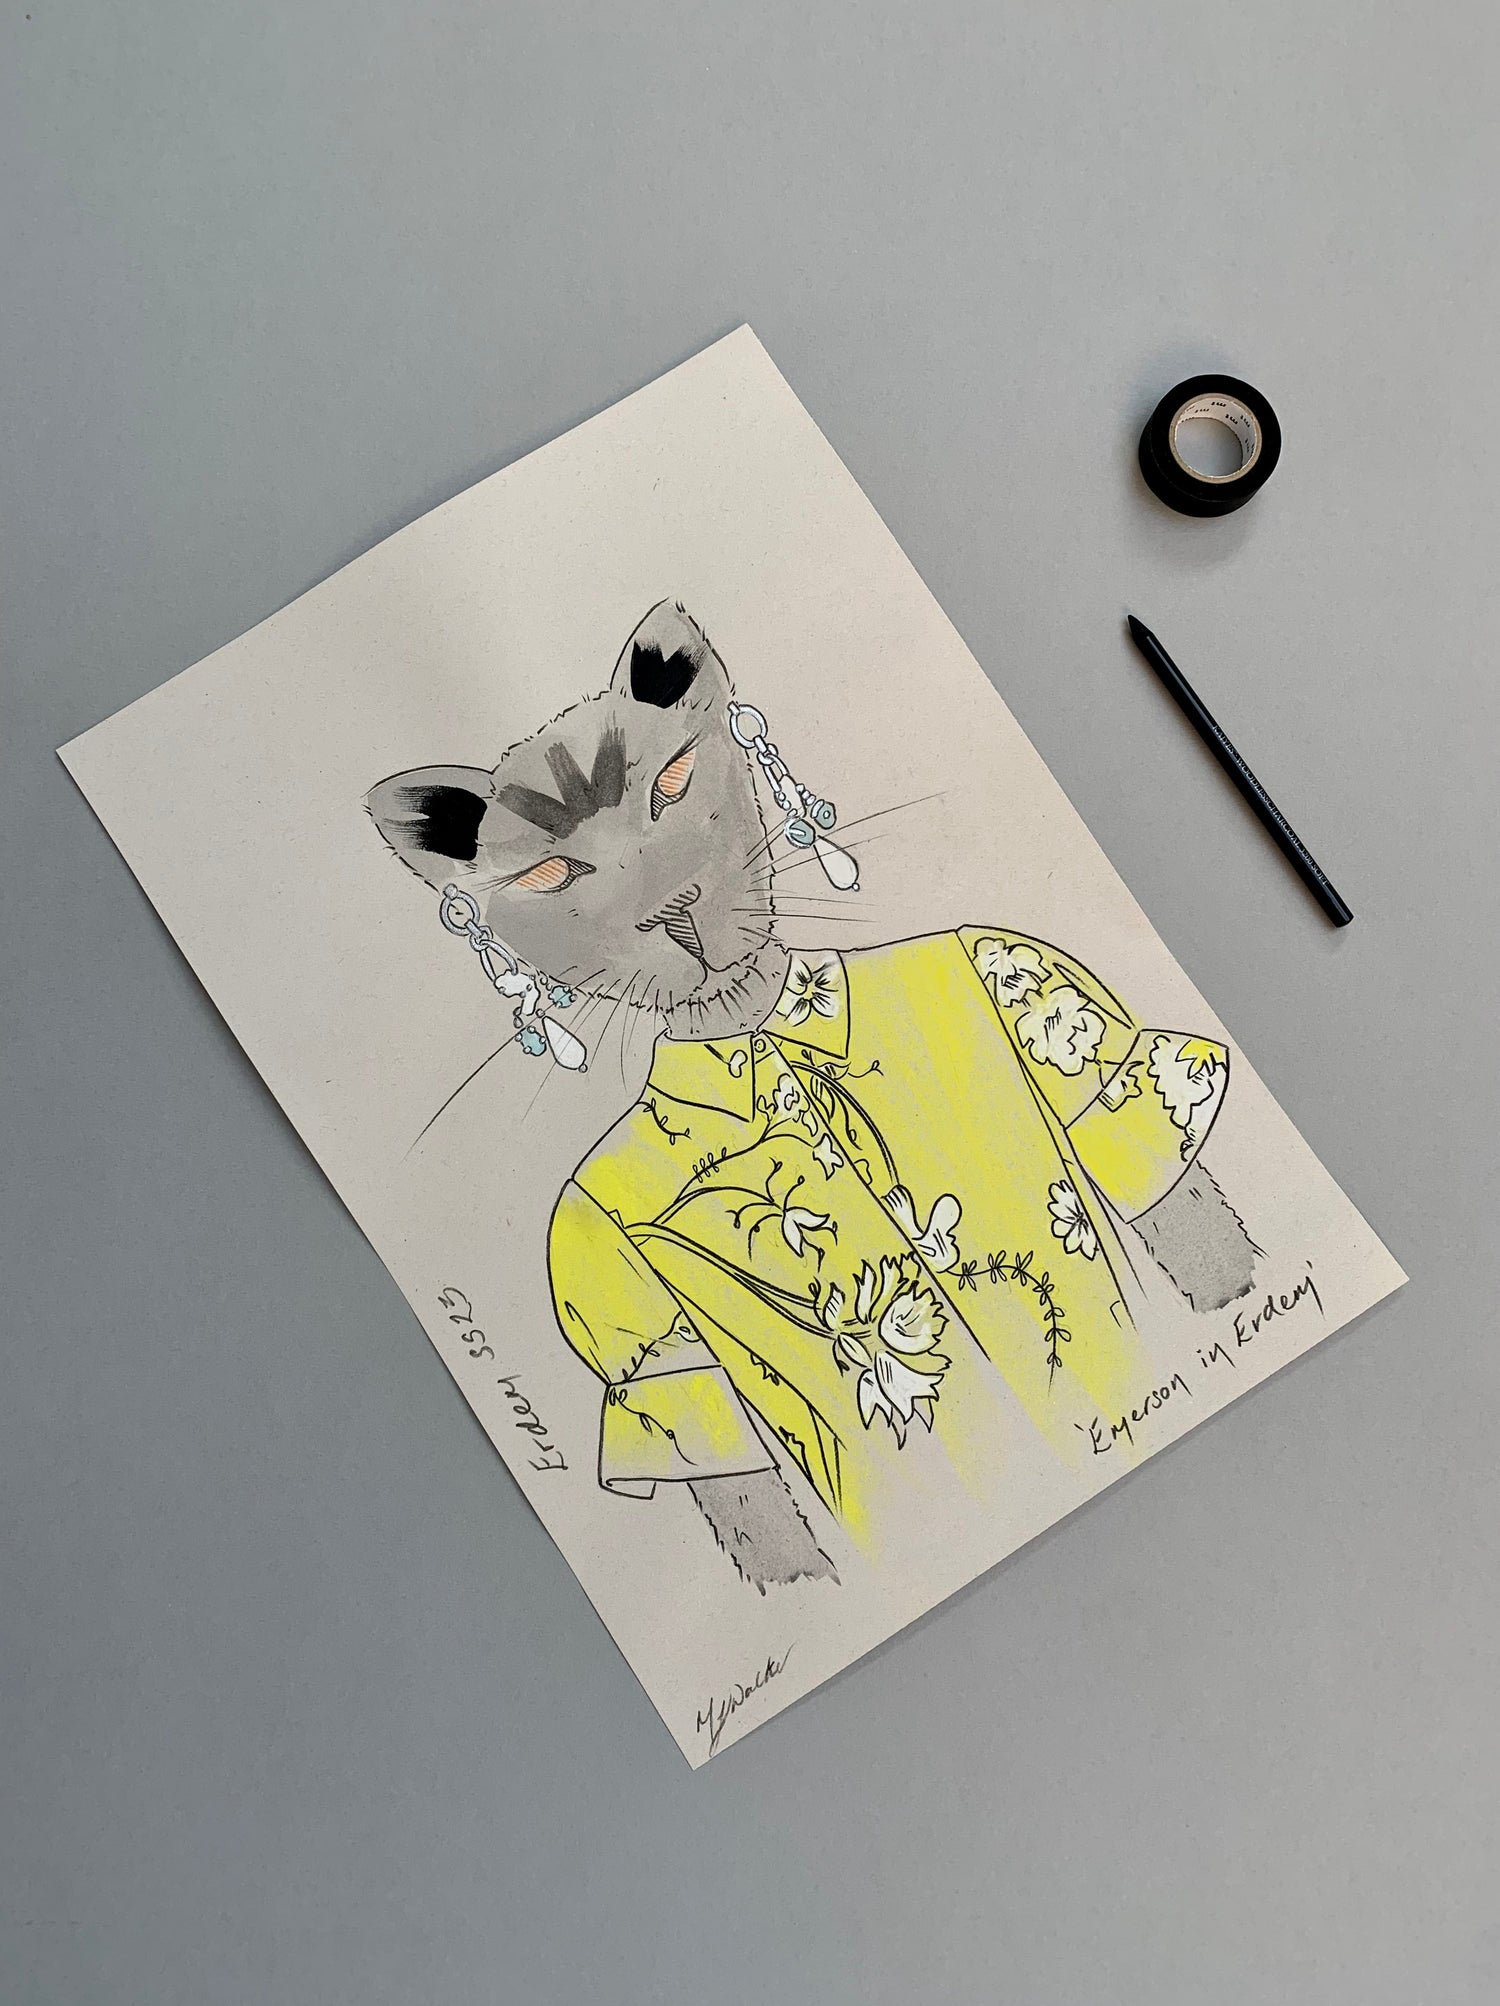 Colourful illustration of a cat in designer Erdem clothing on a grey background.